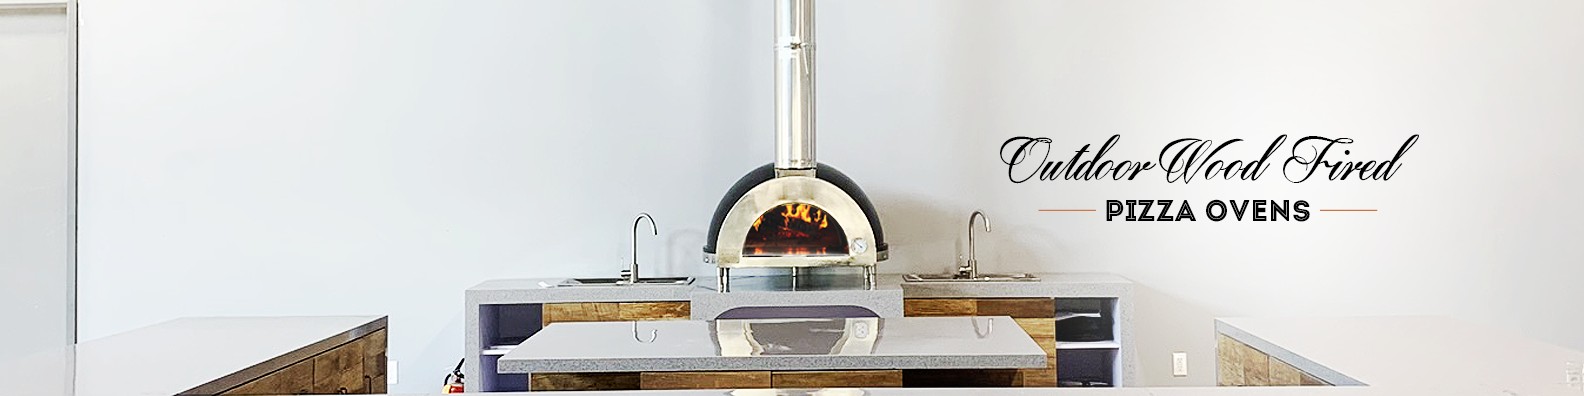 Ilfornino Wood Fired Pizza Ovens Linkedin